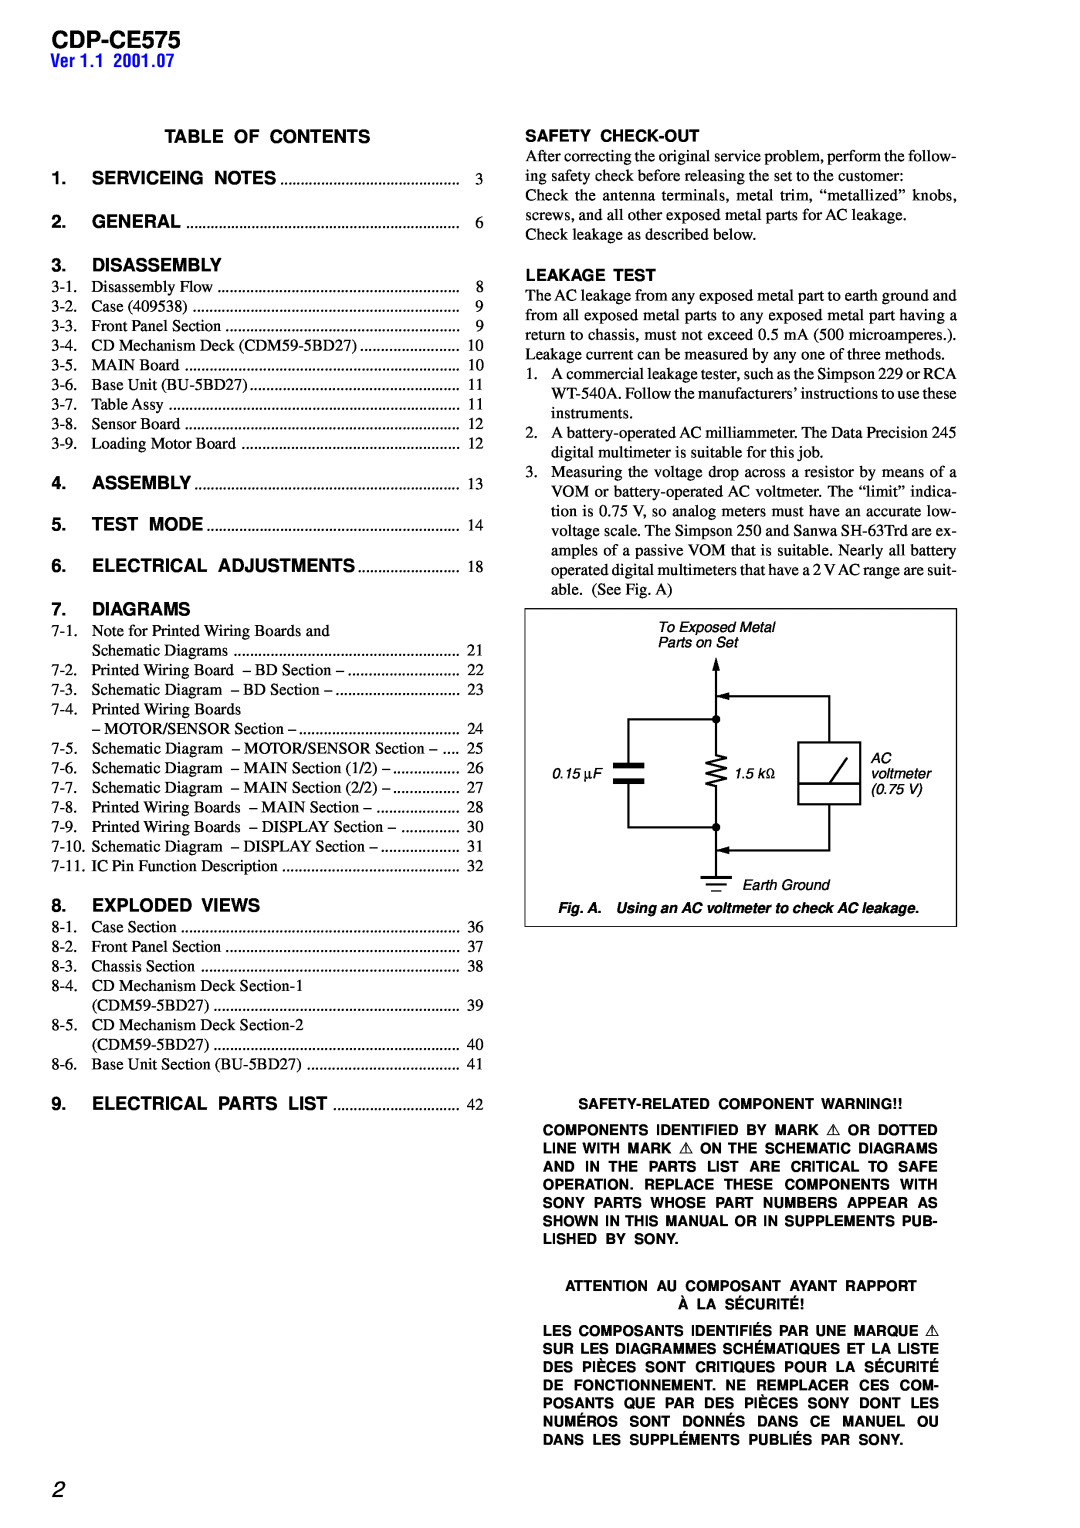 Sony CDP-CE575 service manual Ver 